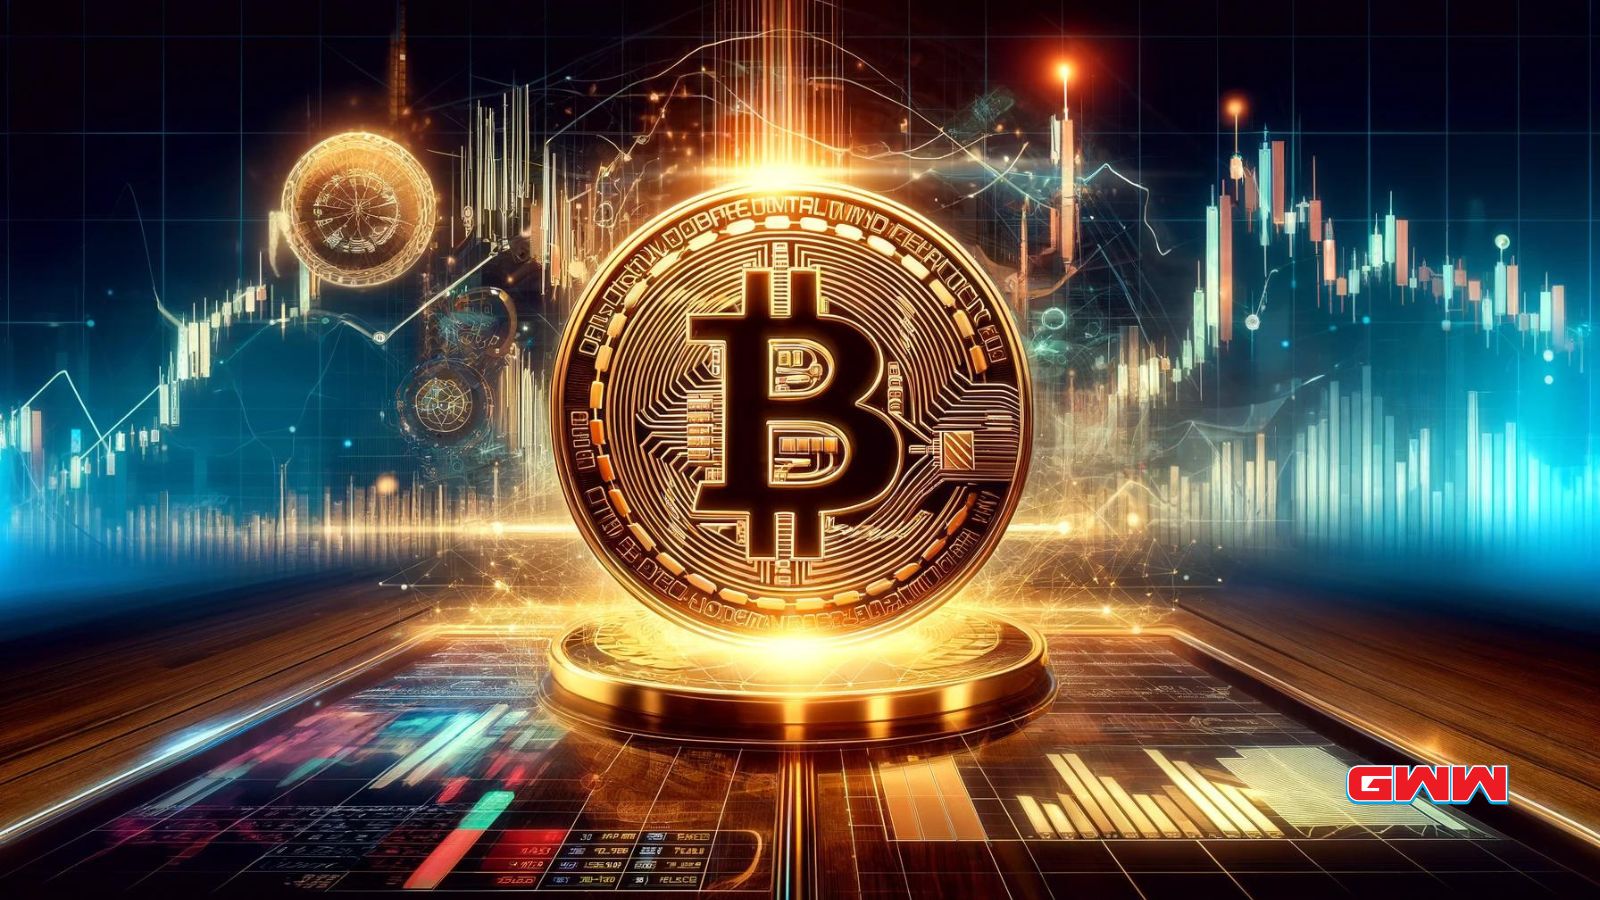 Golden Bitcoin with trading charts, digital financial market backdrop